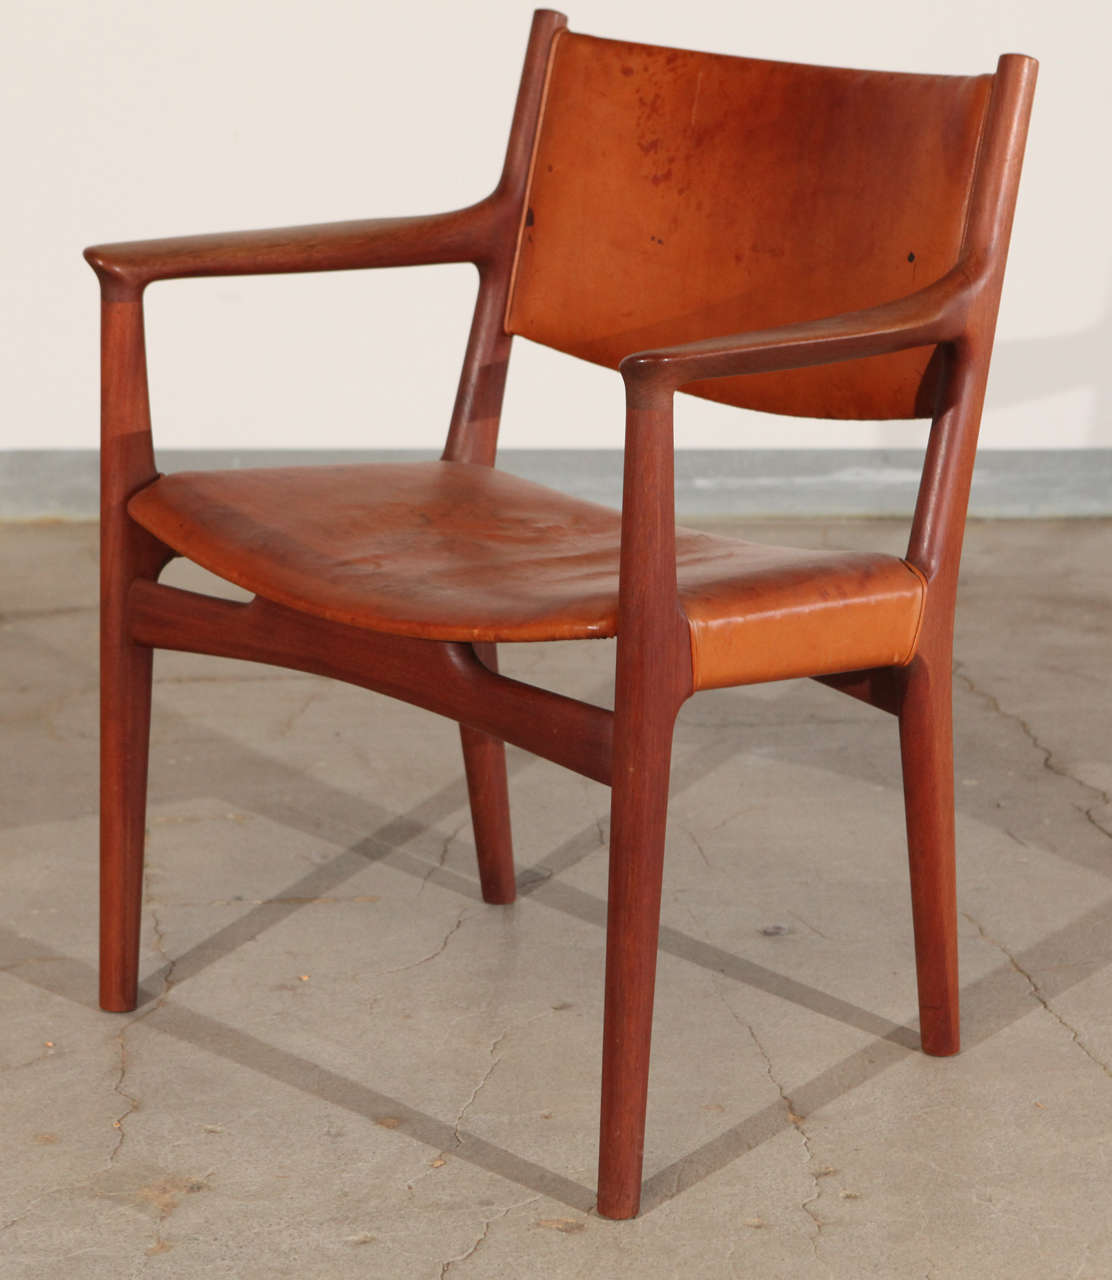 Hans Wegner JH 513 armchair with original leather